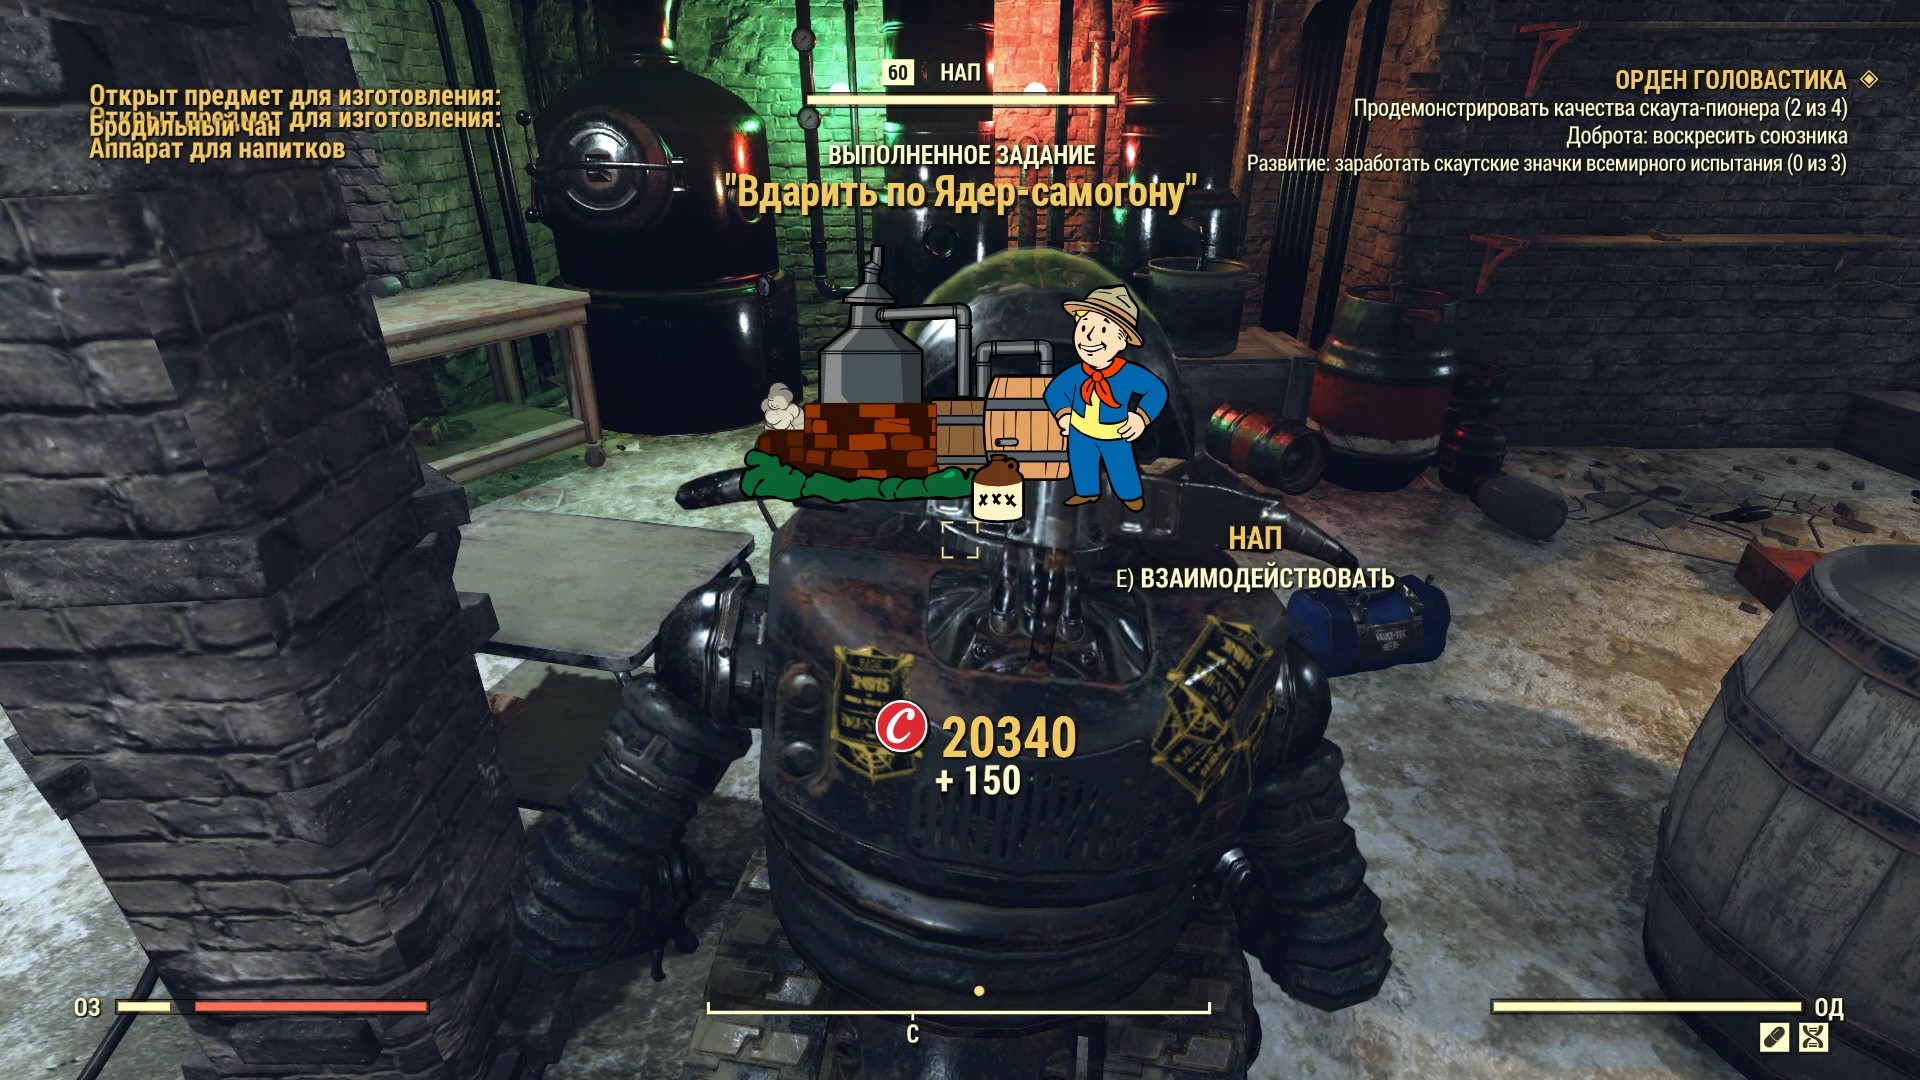 Fallout 76 #39 "Вдарить по ядер-самогону"